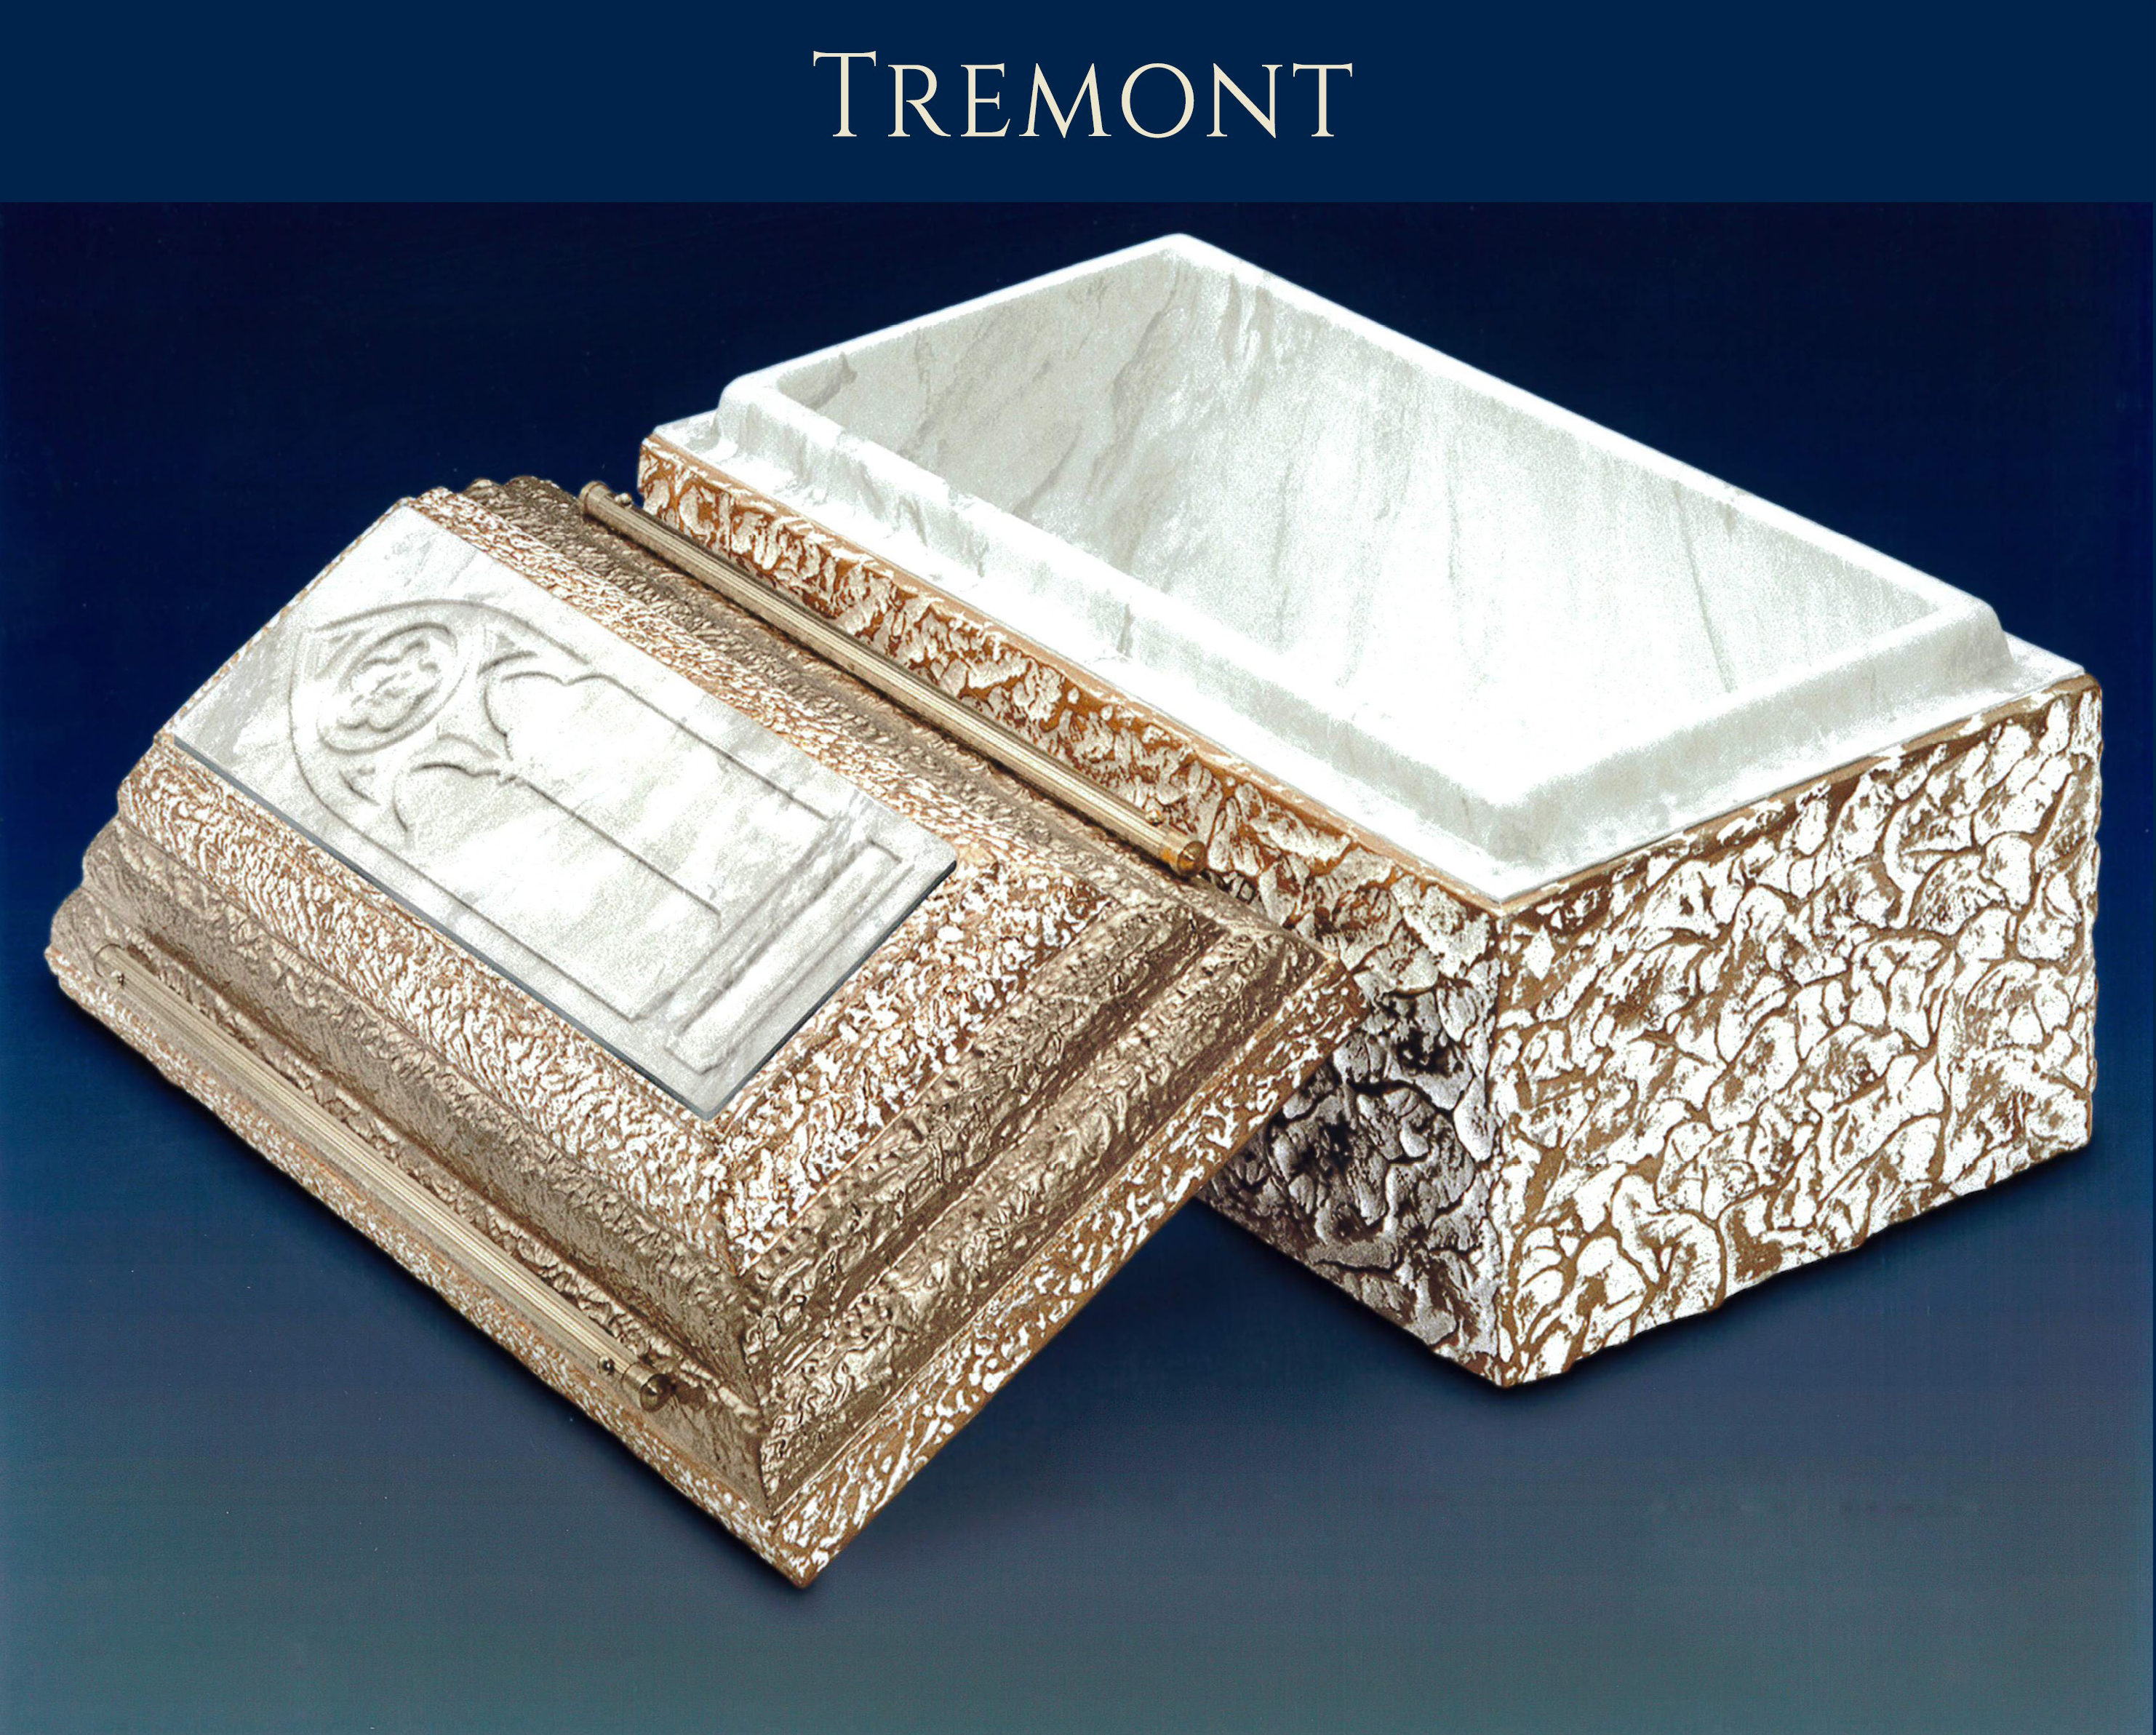 Tremont Vault